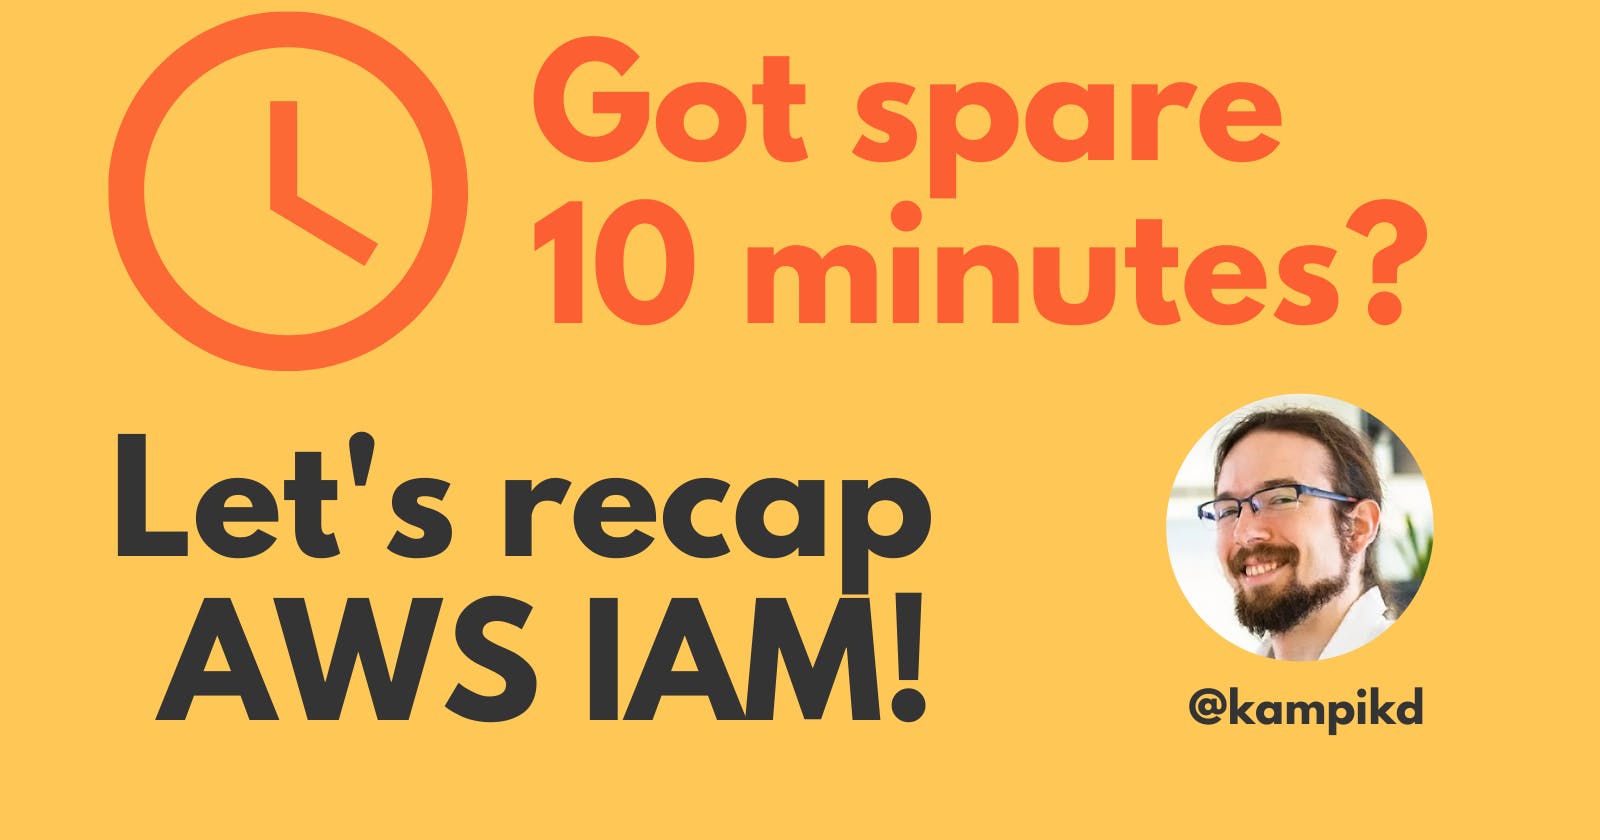 Got spare 10 minutes? Let's recap AWS IAM!